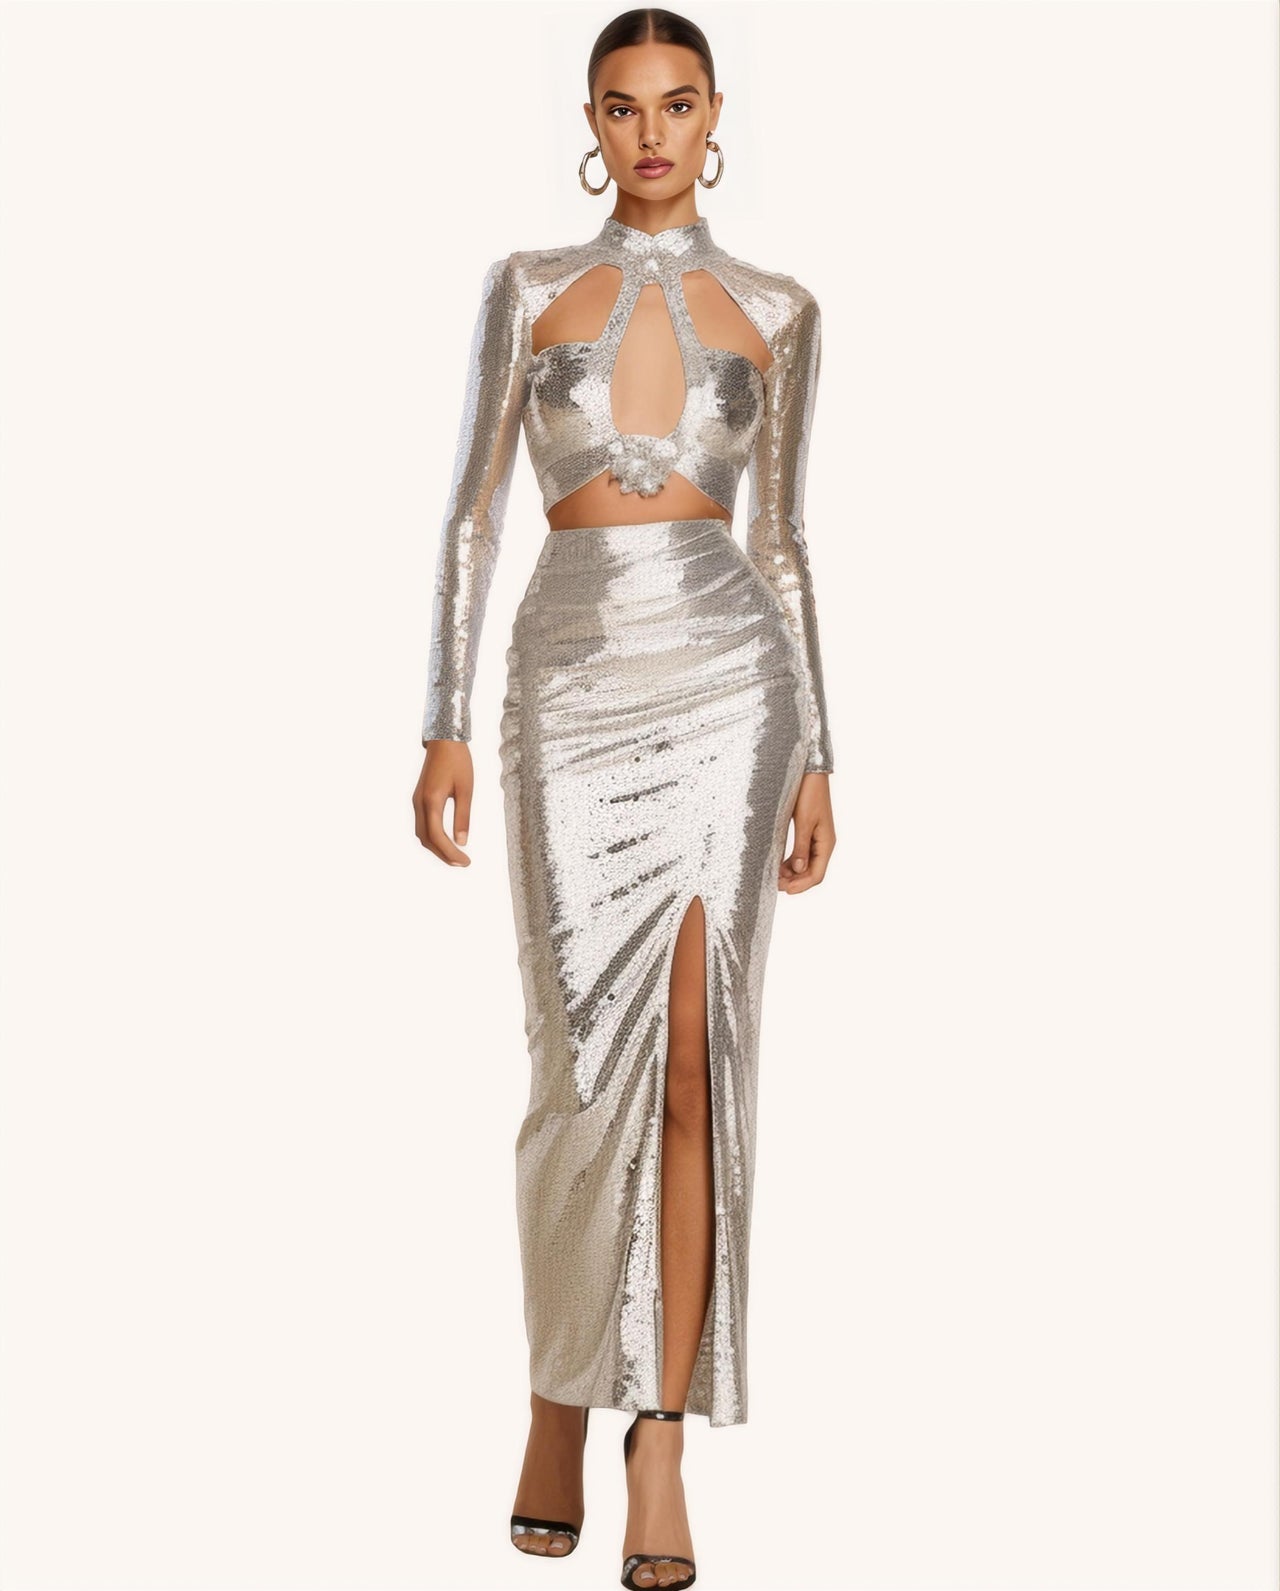 Christine Silver Sequined Midi Dress